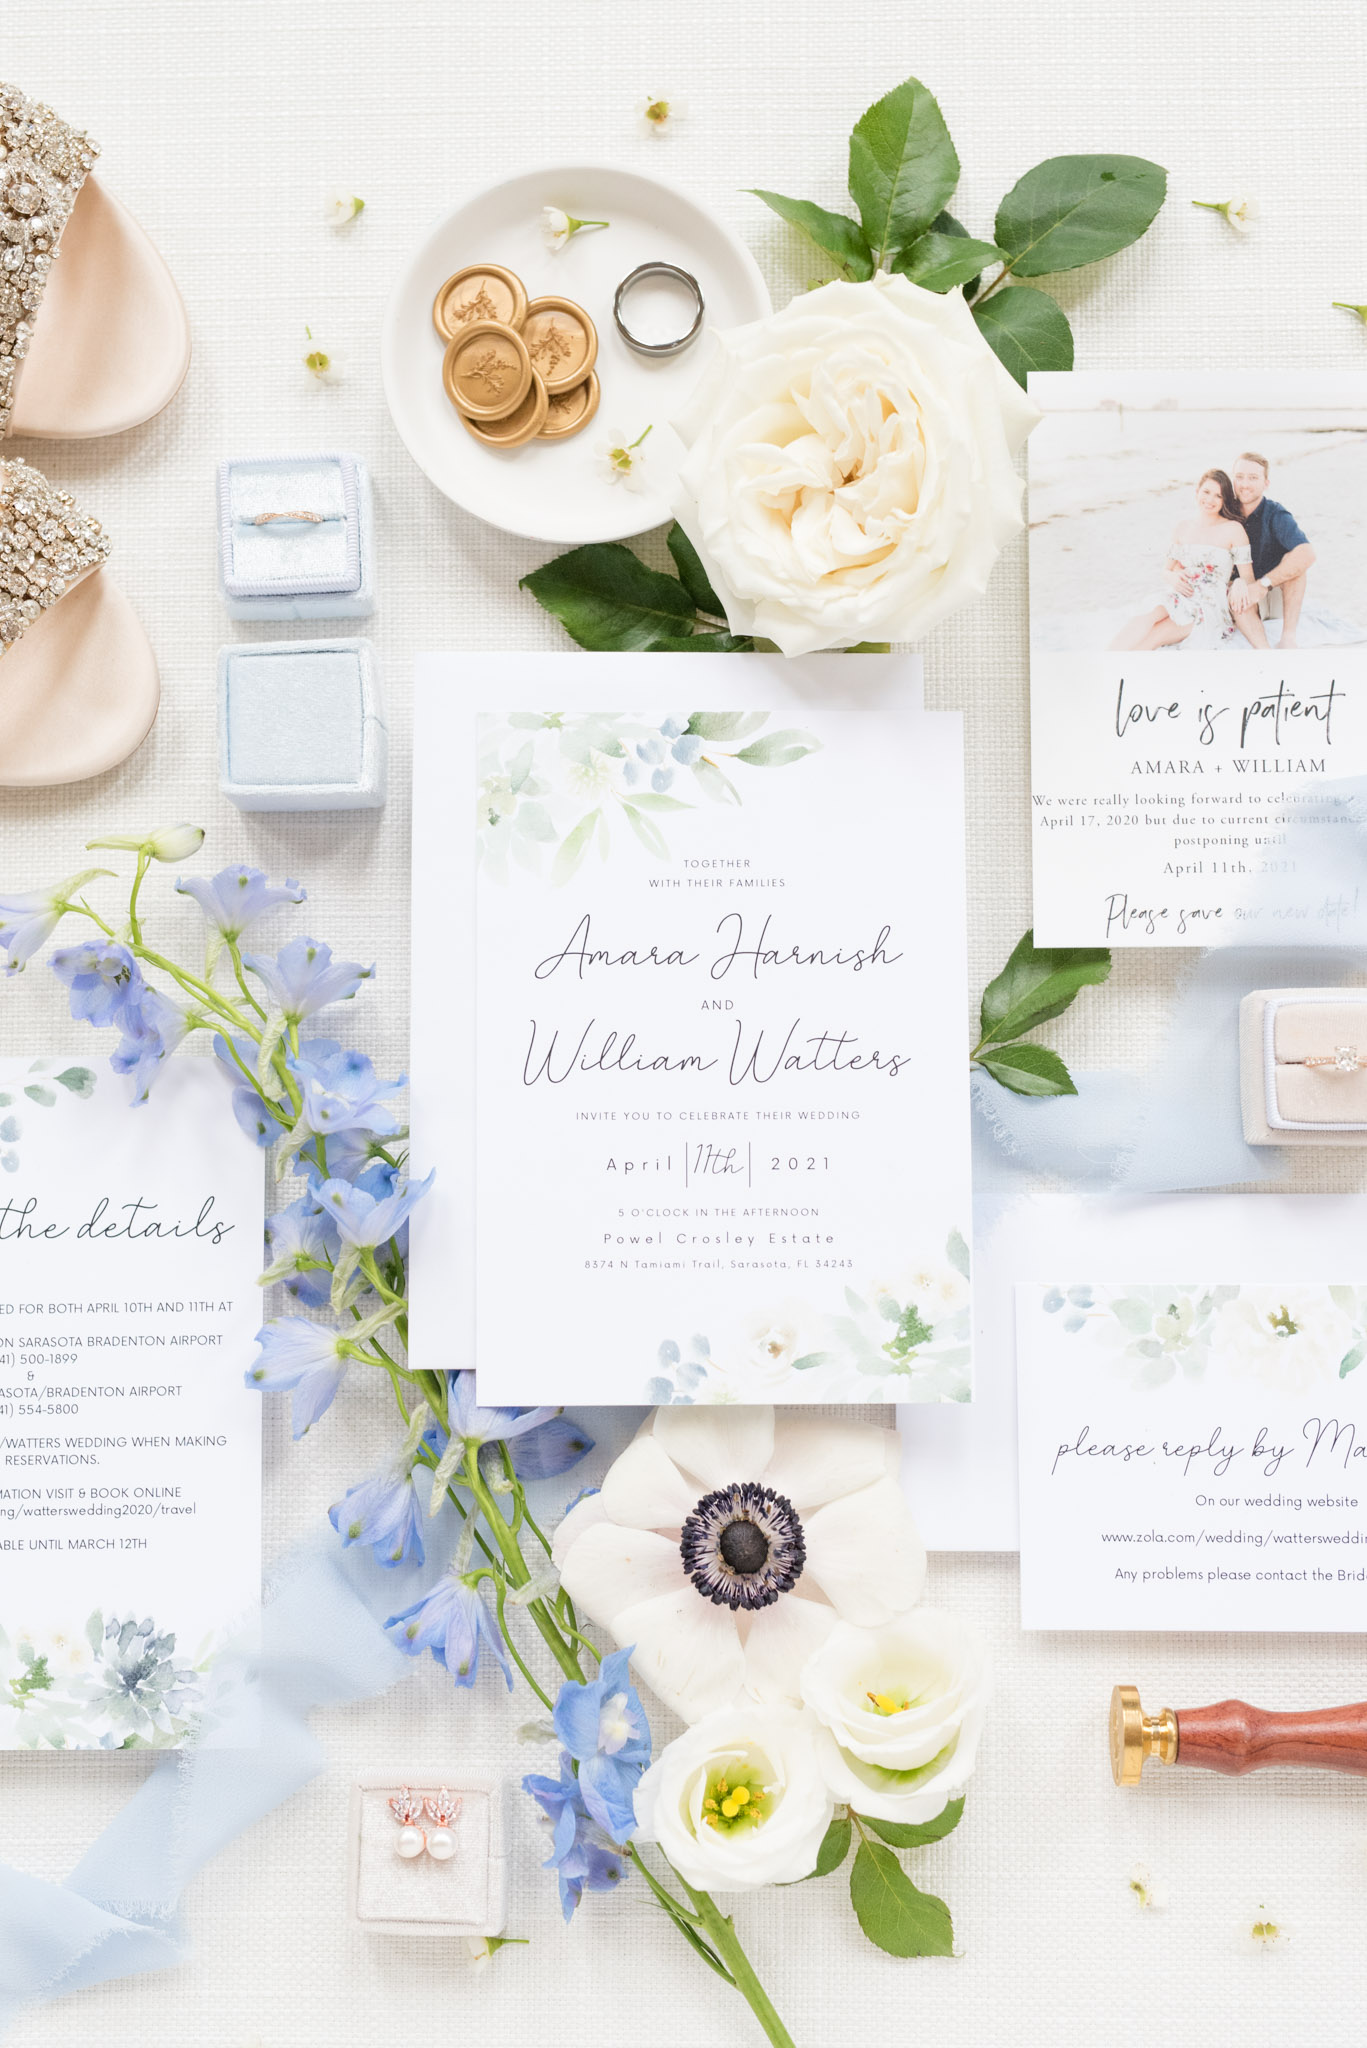 Wedding invitation and bride's details.